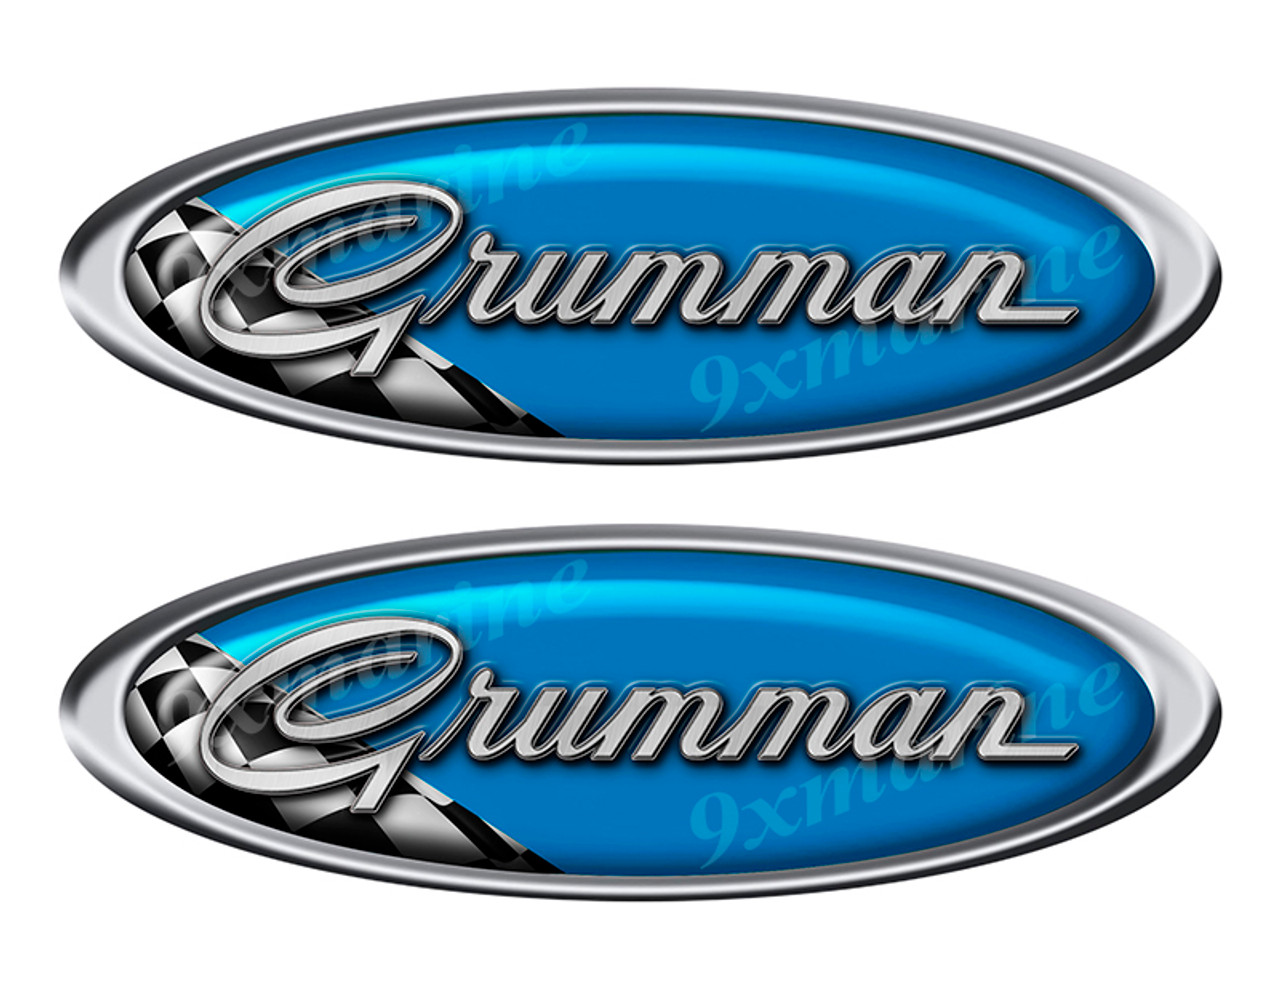 Two Grumman Vinyl Racing Oval Stickers 10" long each